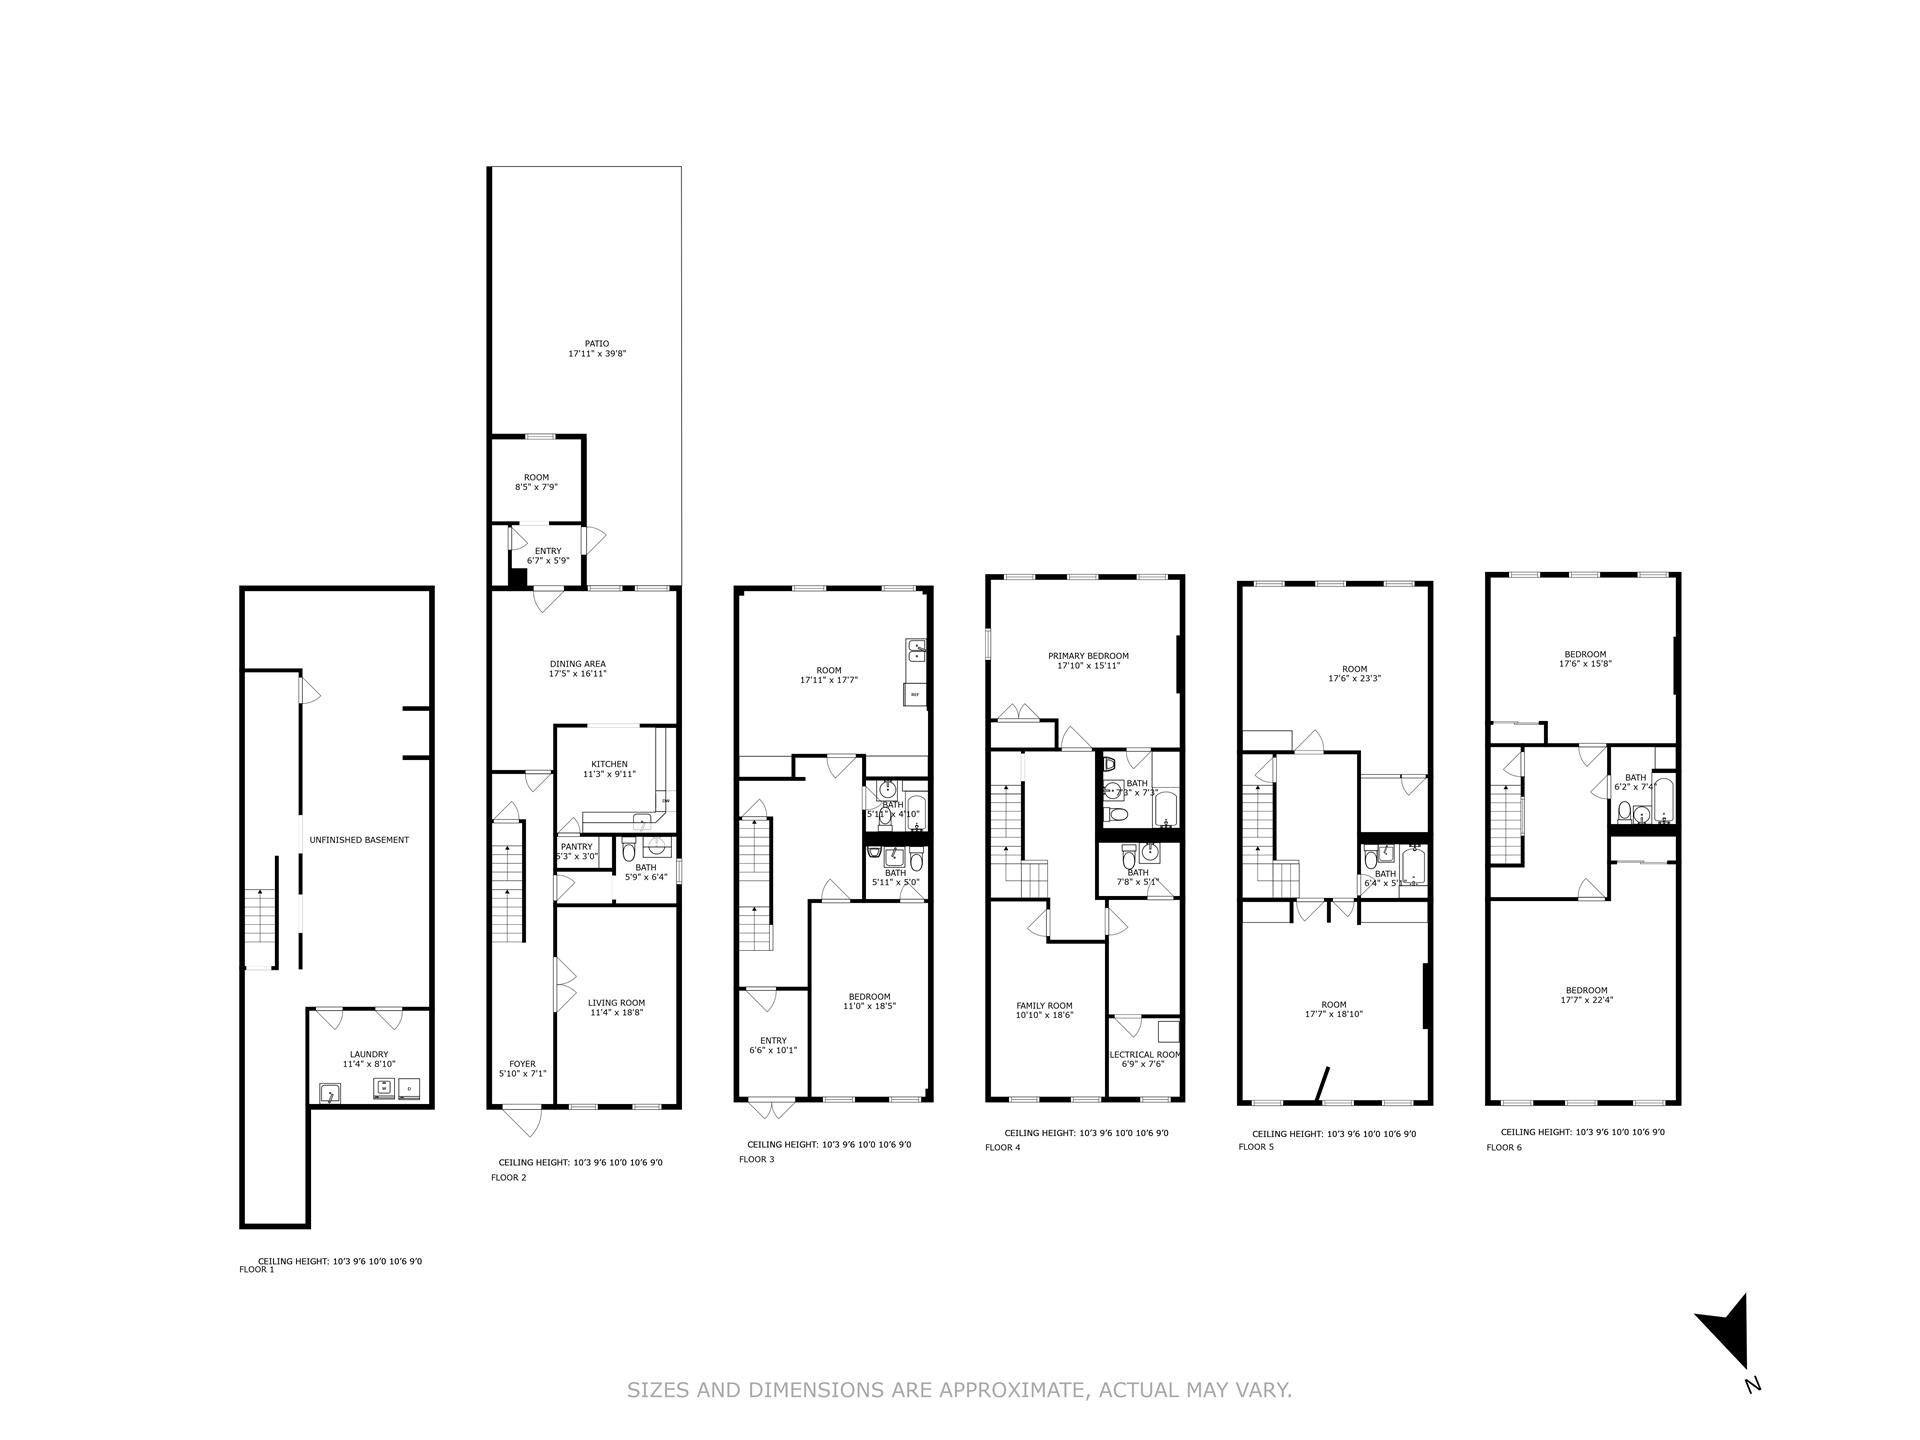 Floorplan for 154 West 122nd Street